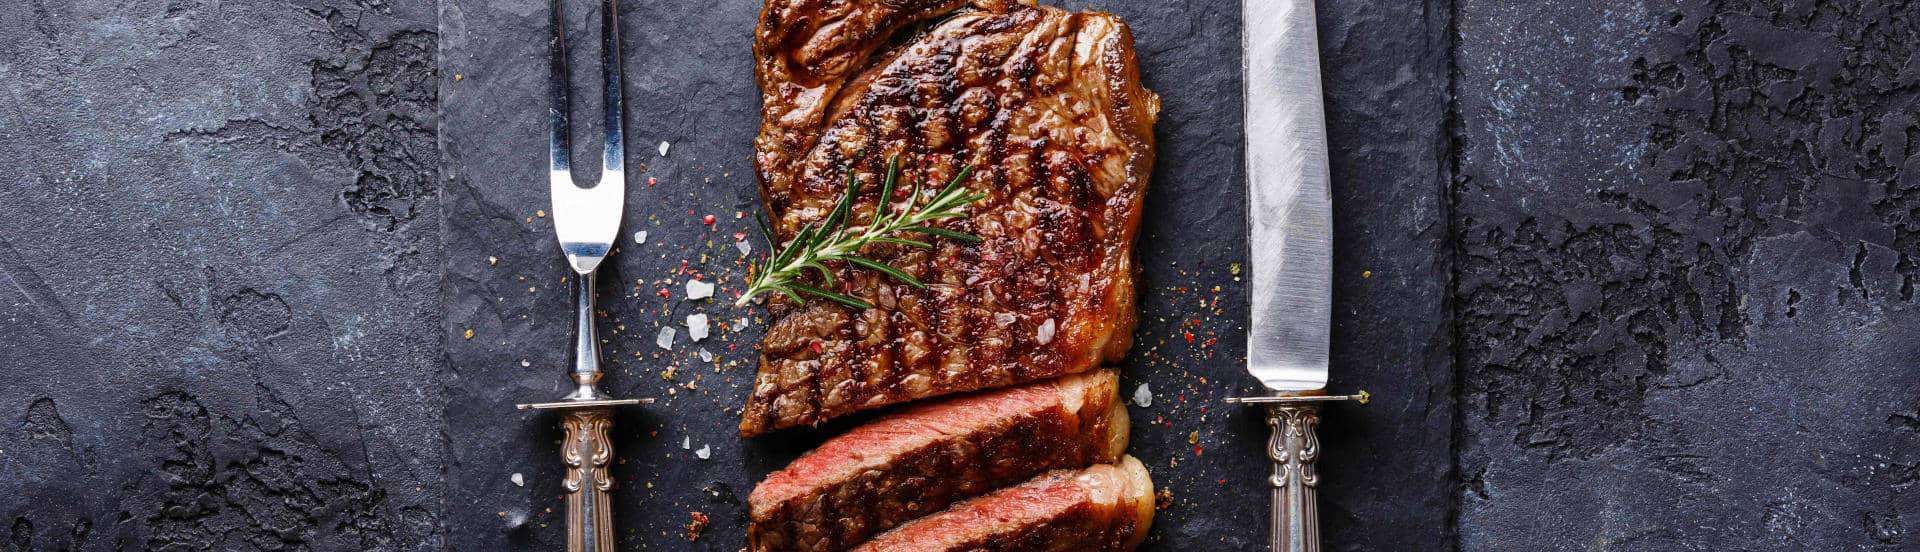 Food/Health - Steak